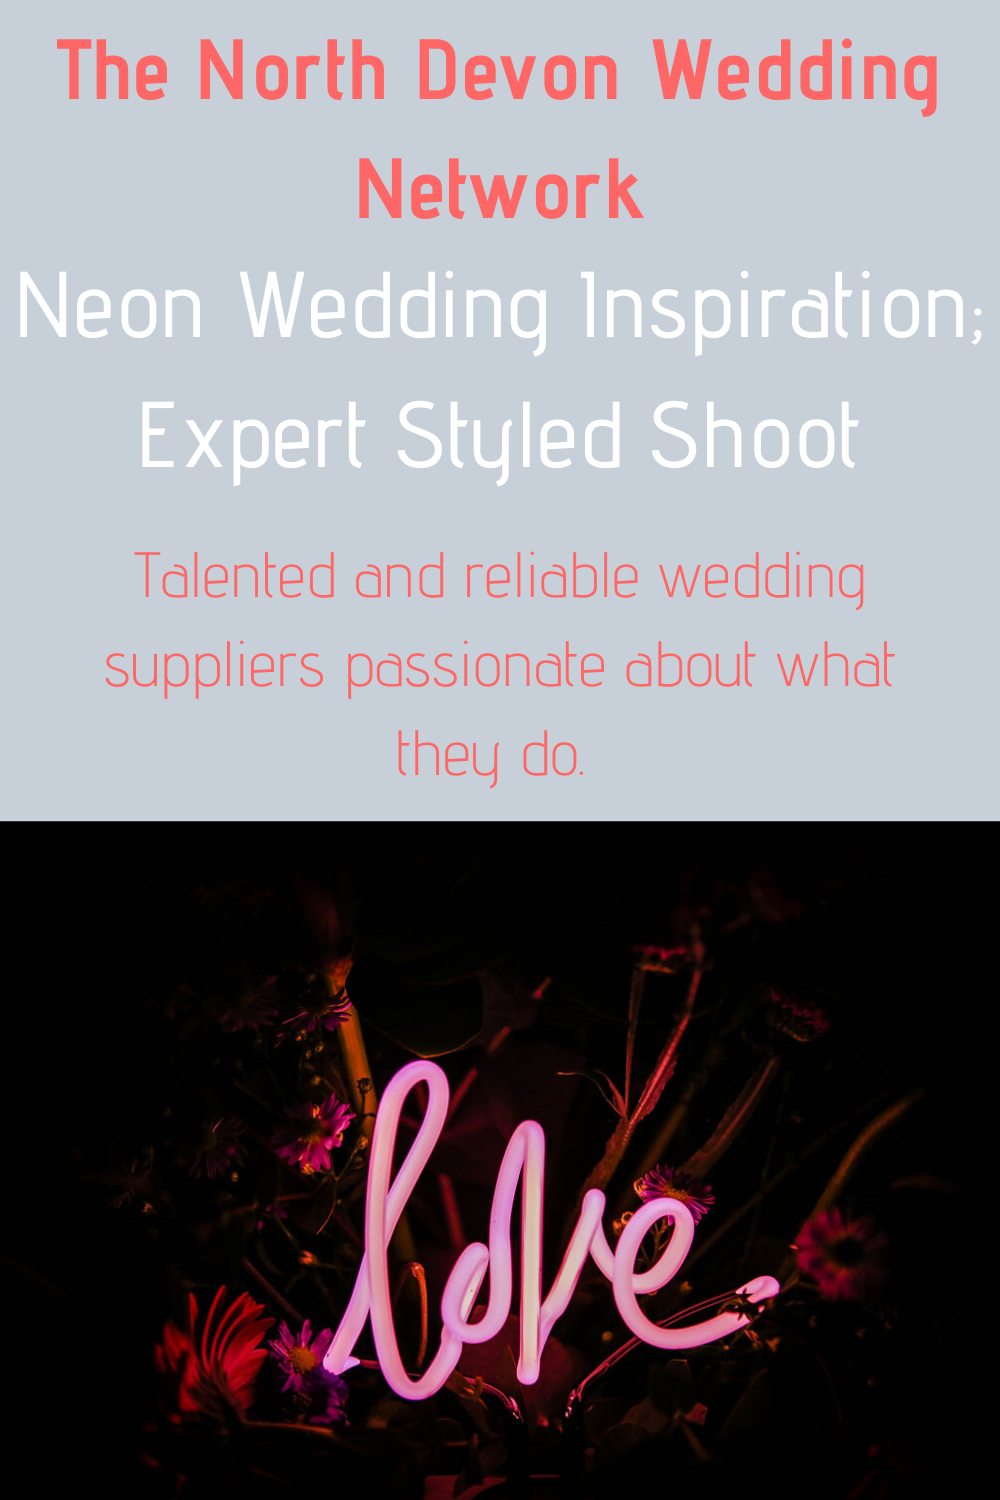 Neon Wedding inspiration; expert styled shoot